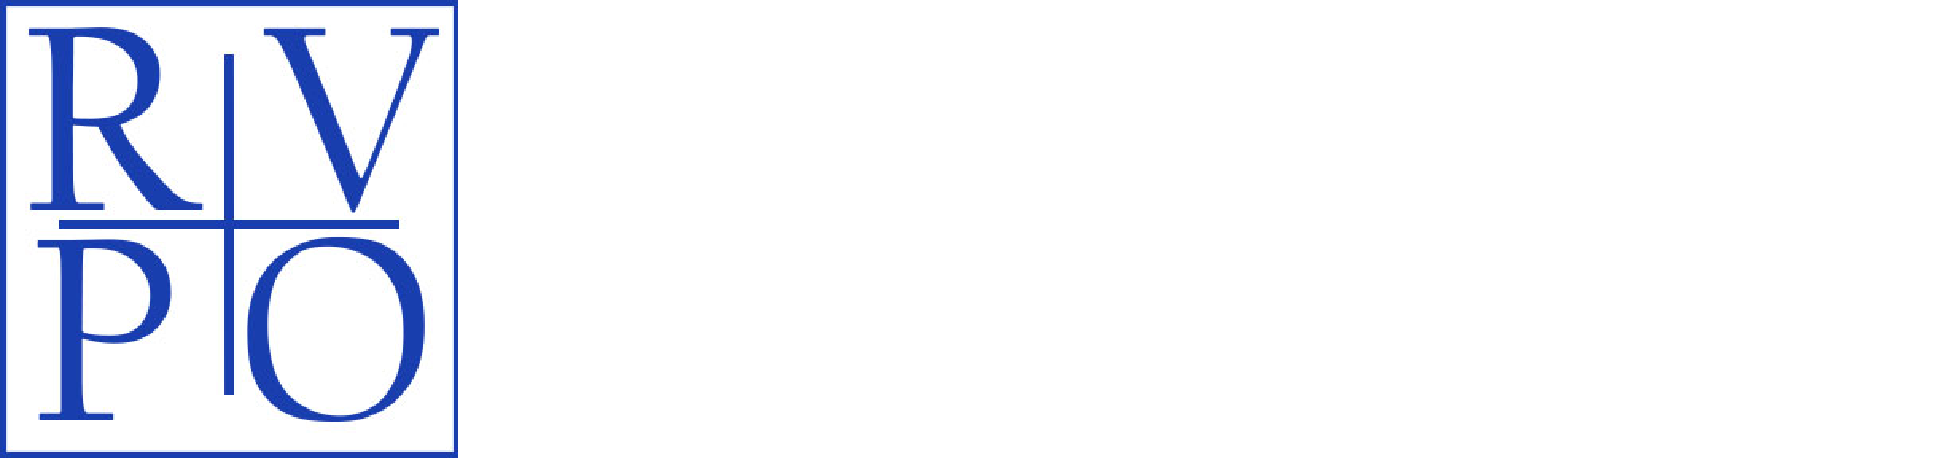 RV Parts Overstock